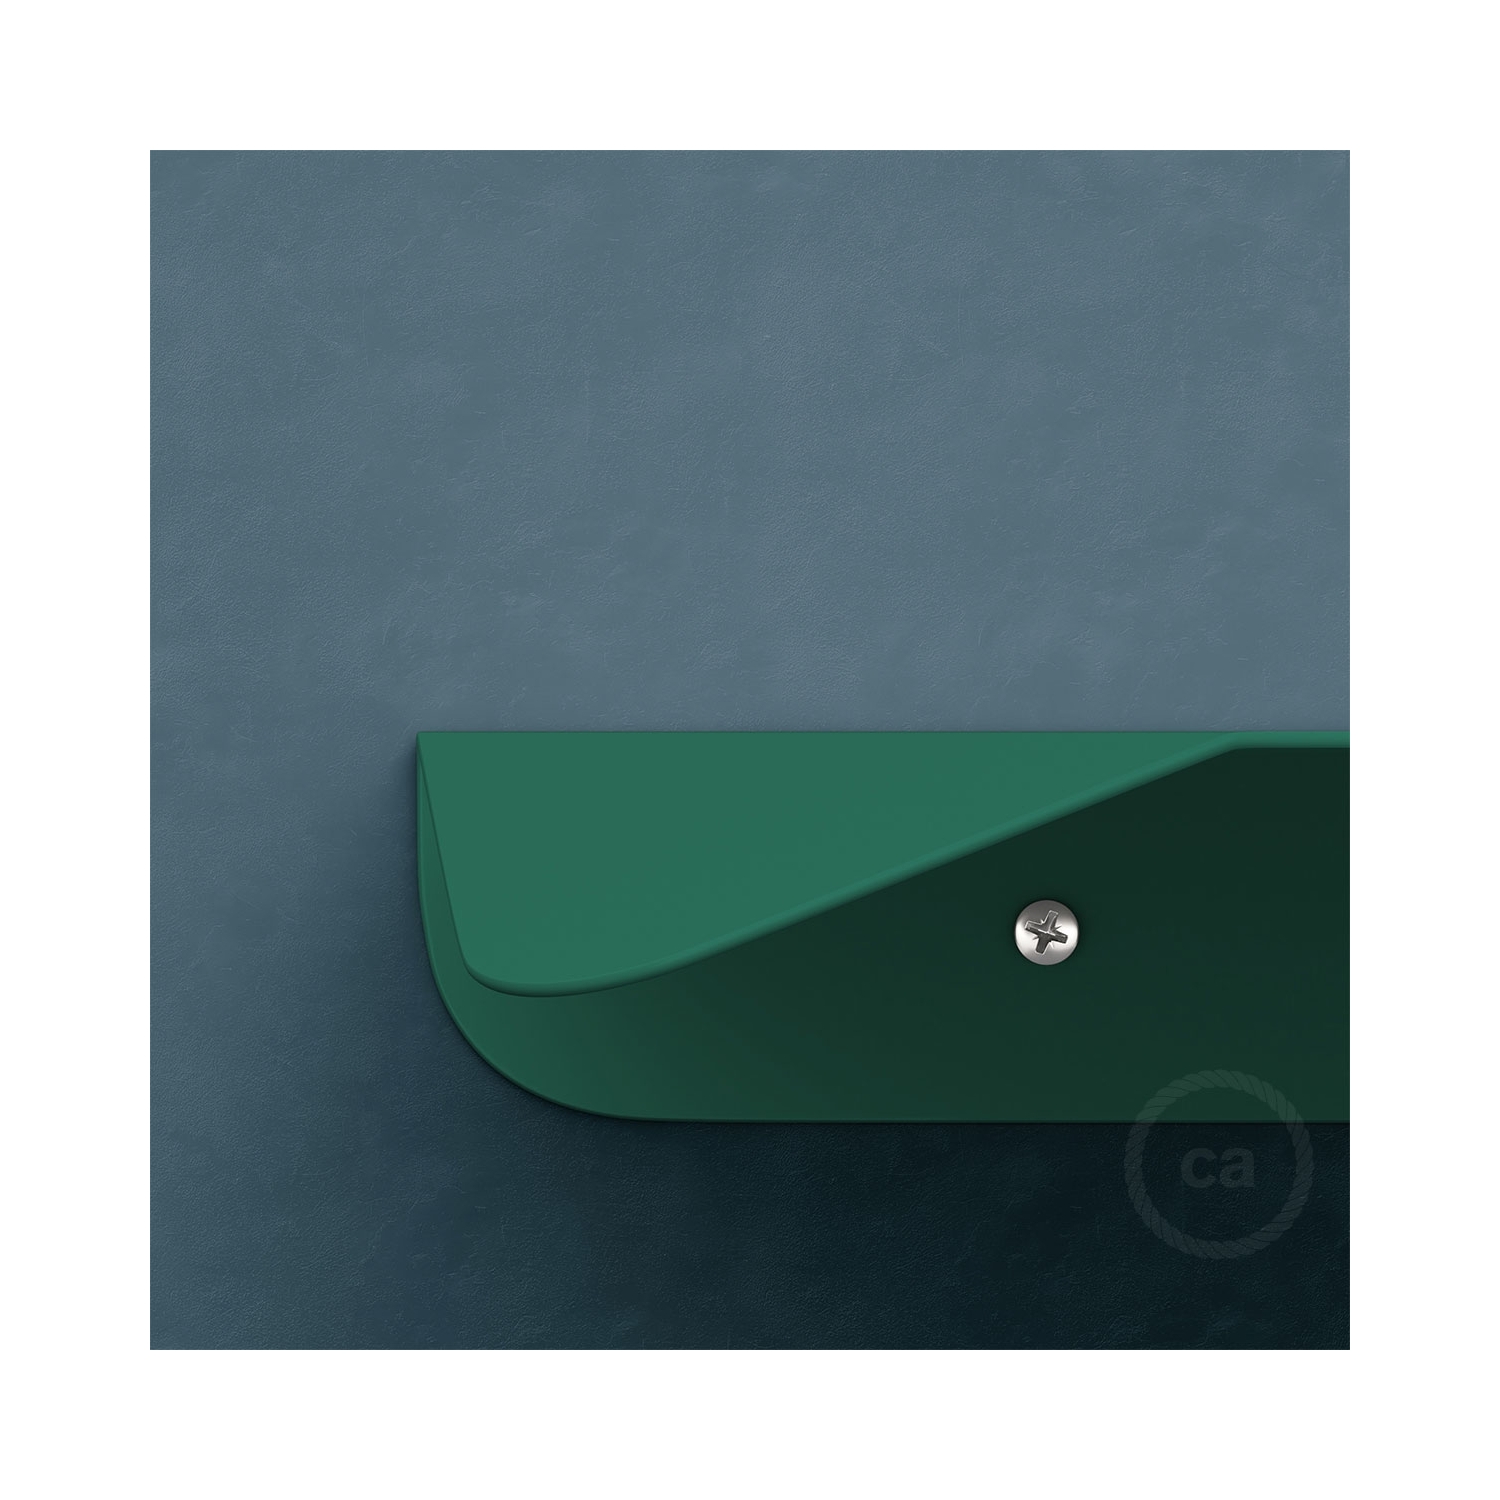 Magnetico®-Shelf Green, metal shelf for Magnetico®-Plug